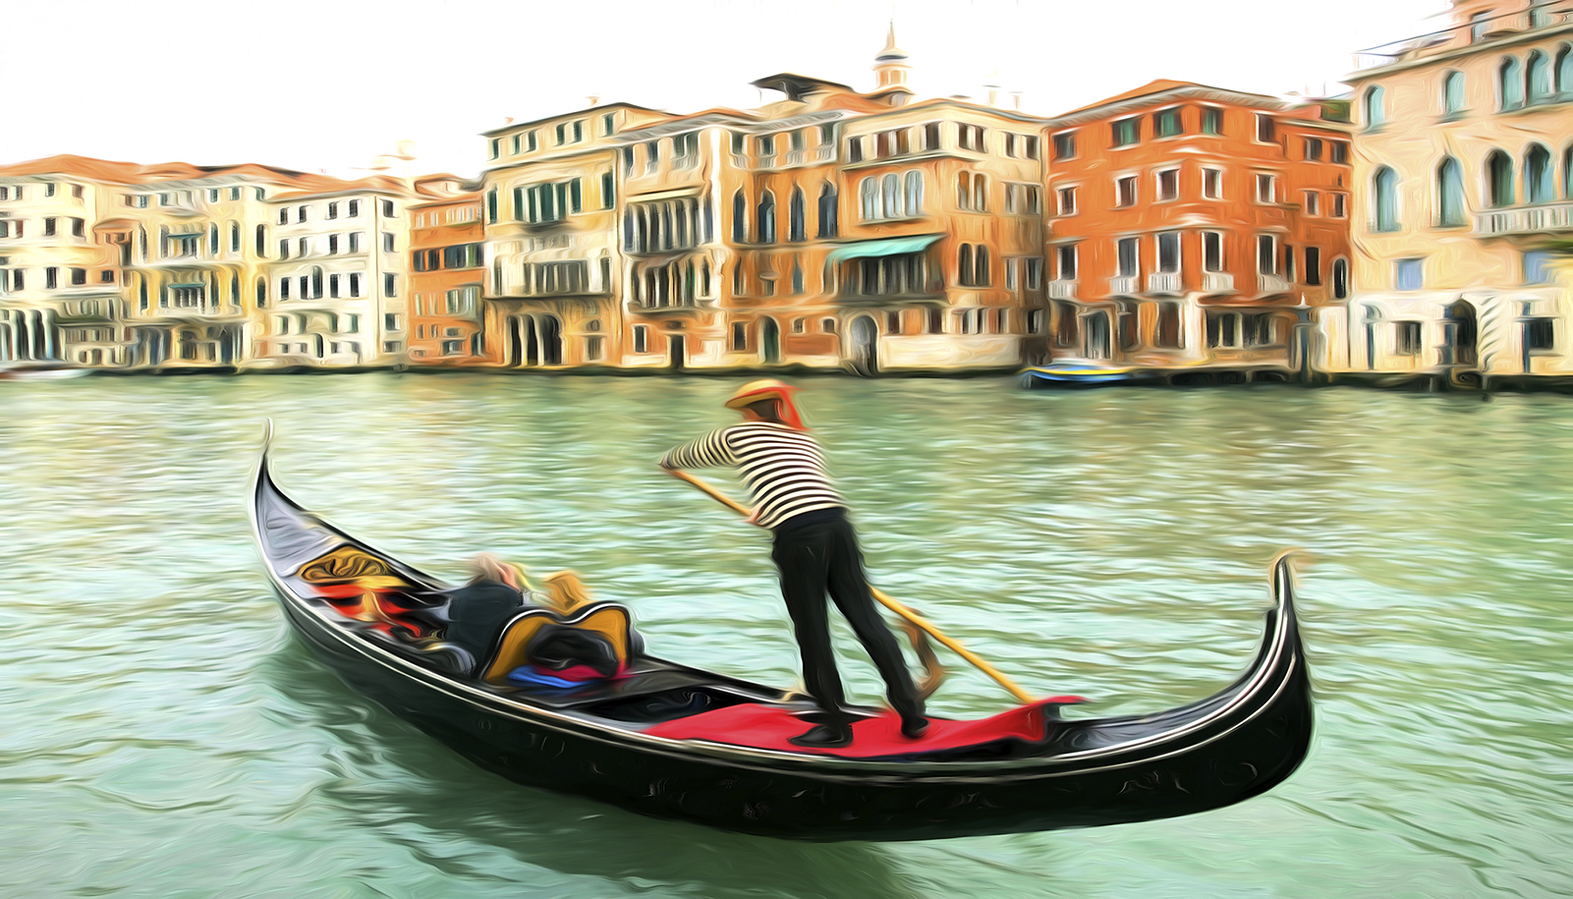 Venedig-Canale Grande-Gondeln-venezianische-Fotokunst-Fotomalerei-DXO1I8326a.jpg